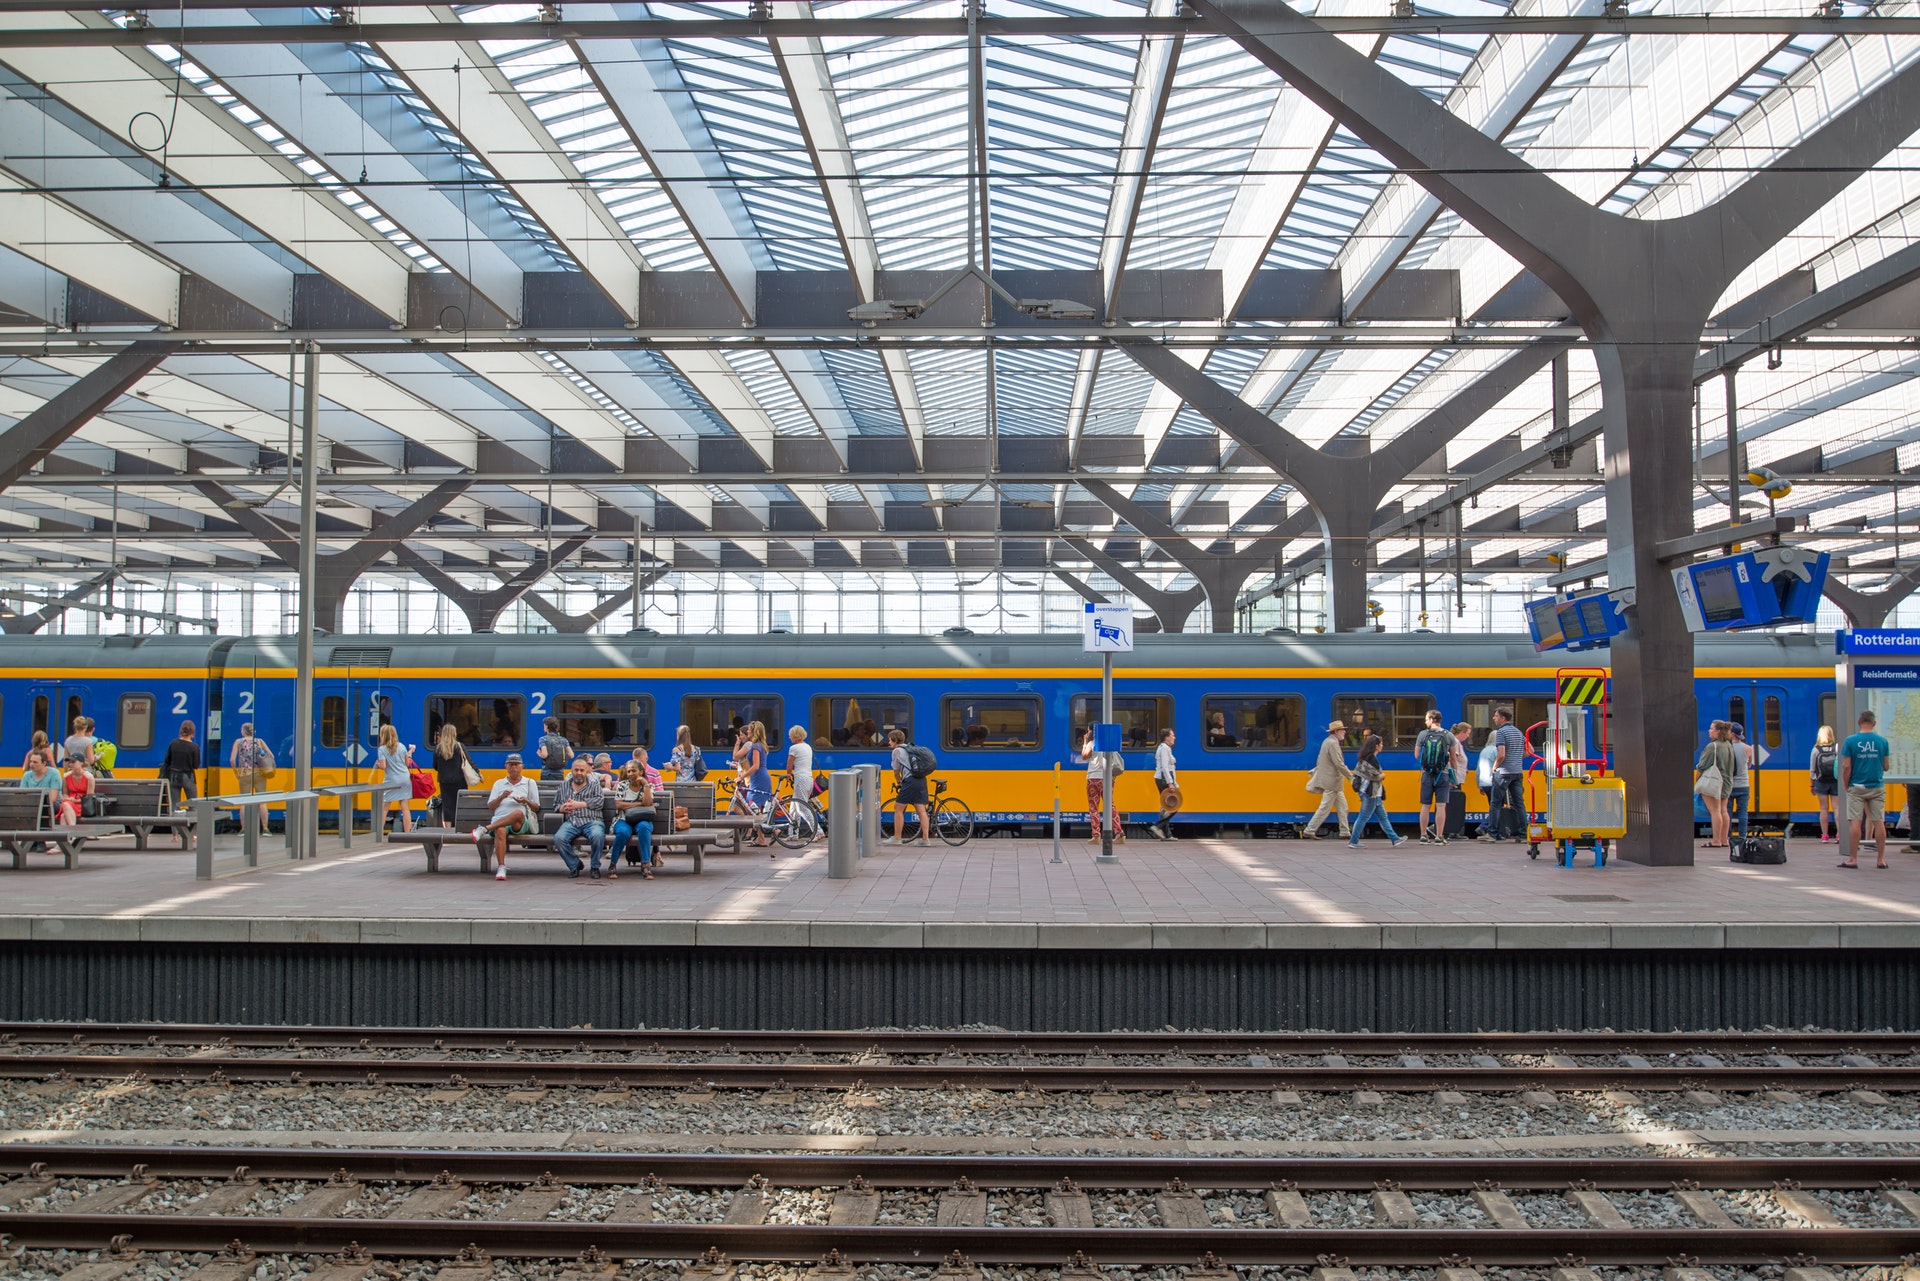 Train station rotterdam - ZOYO Travel